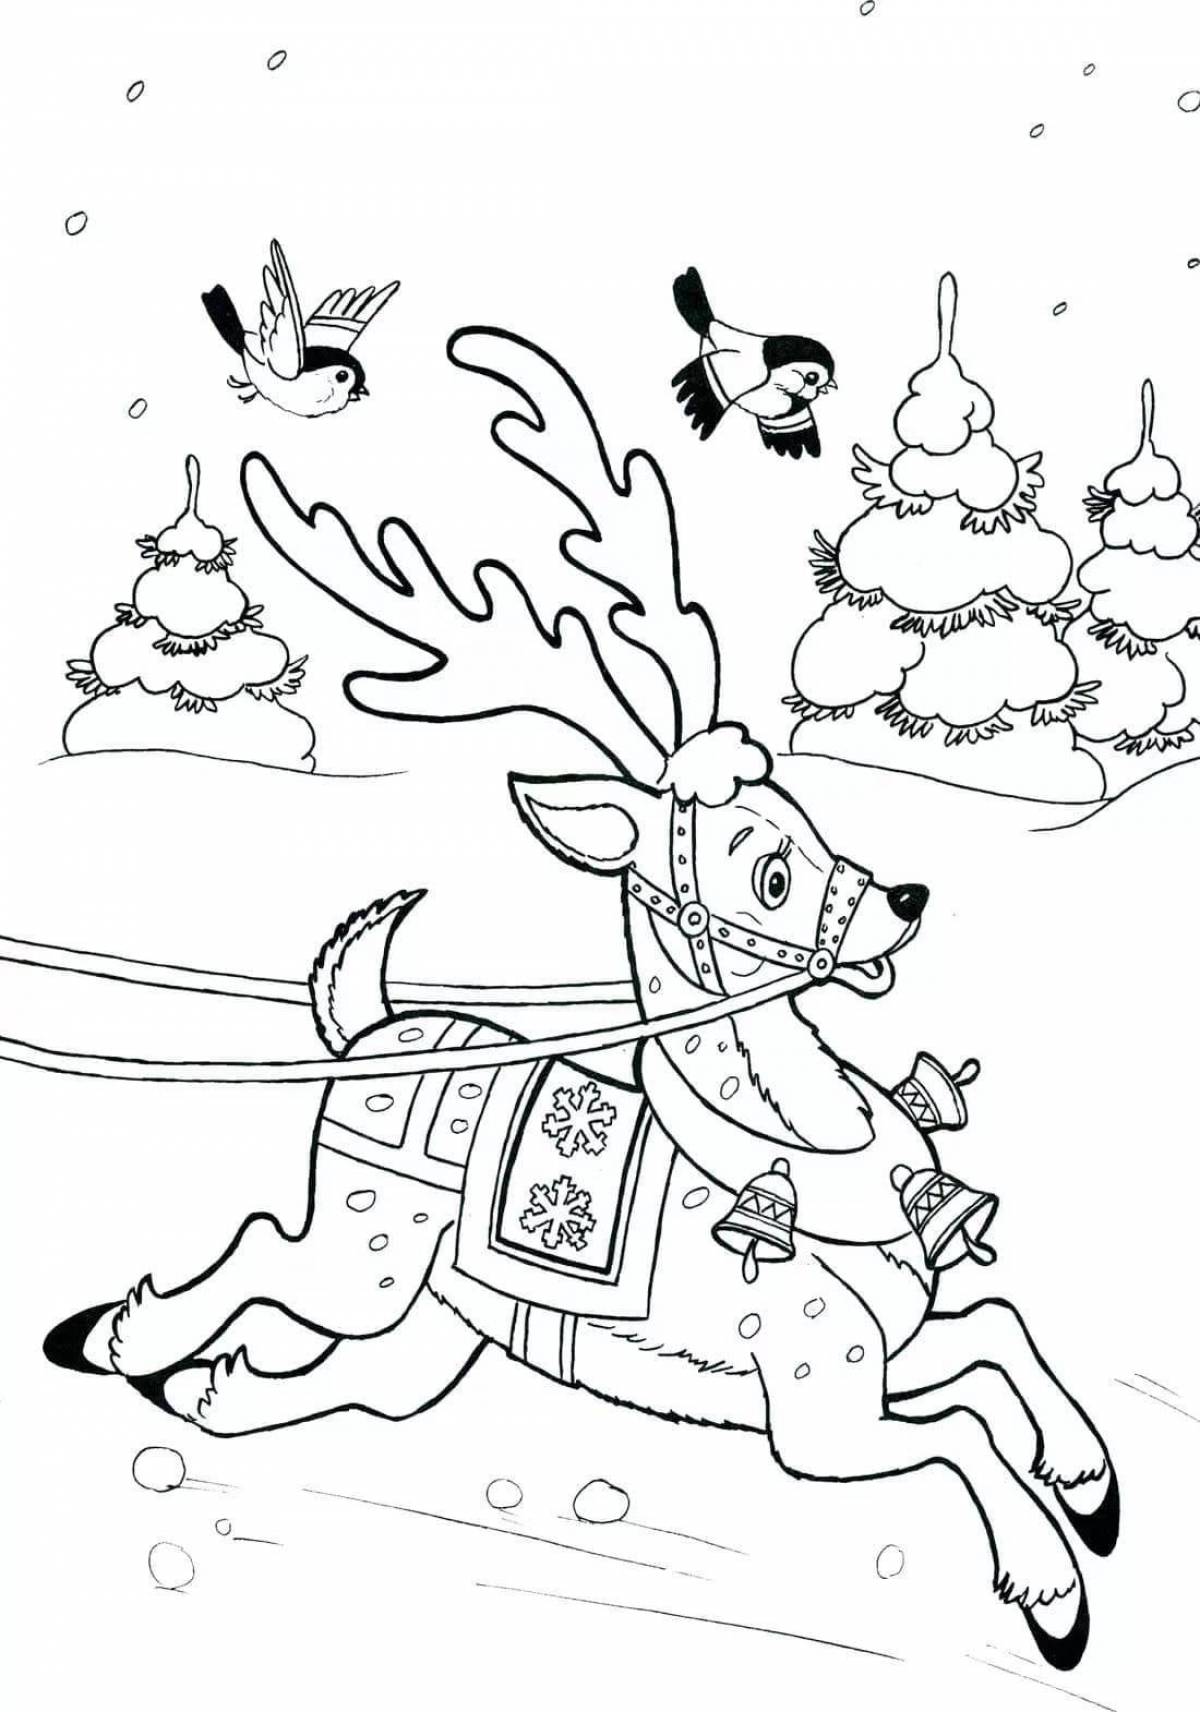 Christmas reindeer coloring page